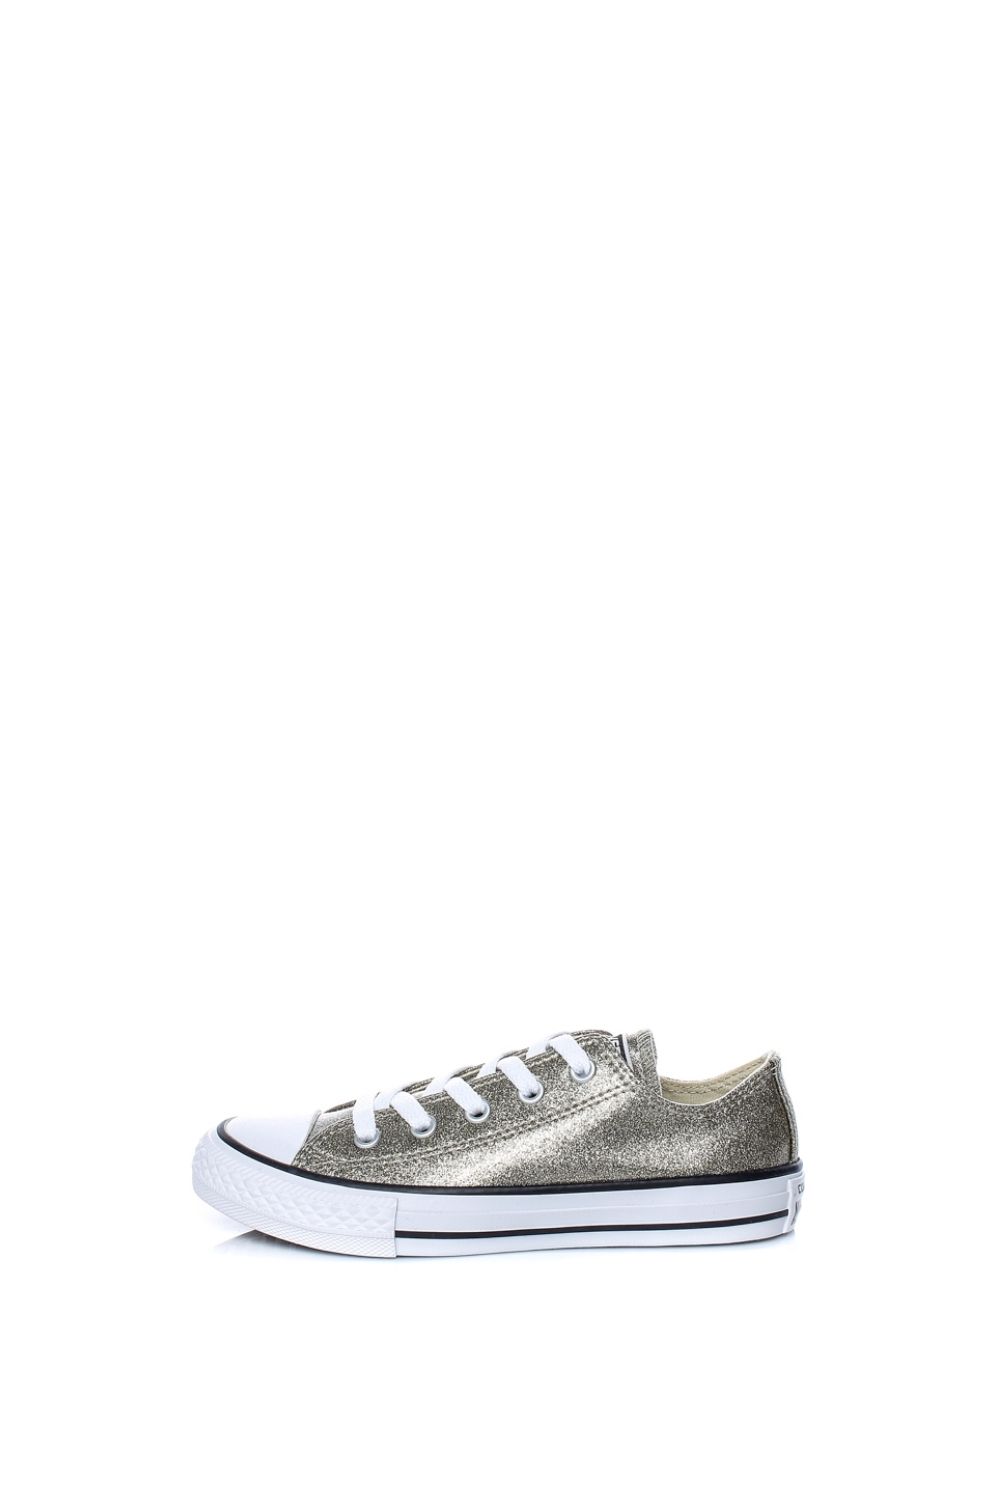 CONVERSE - Παιδικά παπούτσια Chuck Taylor All Star Ox ασημί-χρυσά Παιδικά/Girls/Παπούτσια/Sneakers